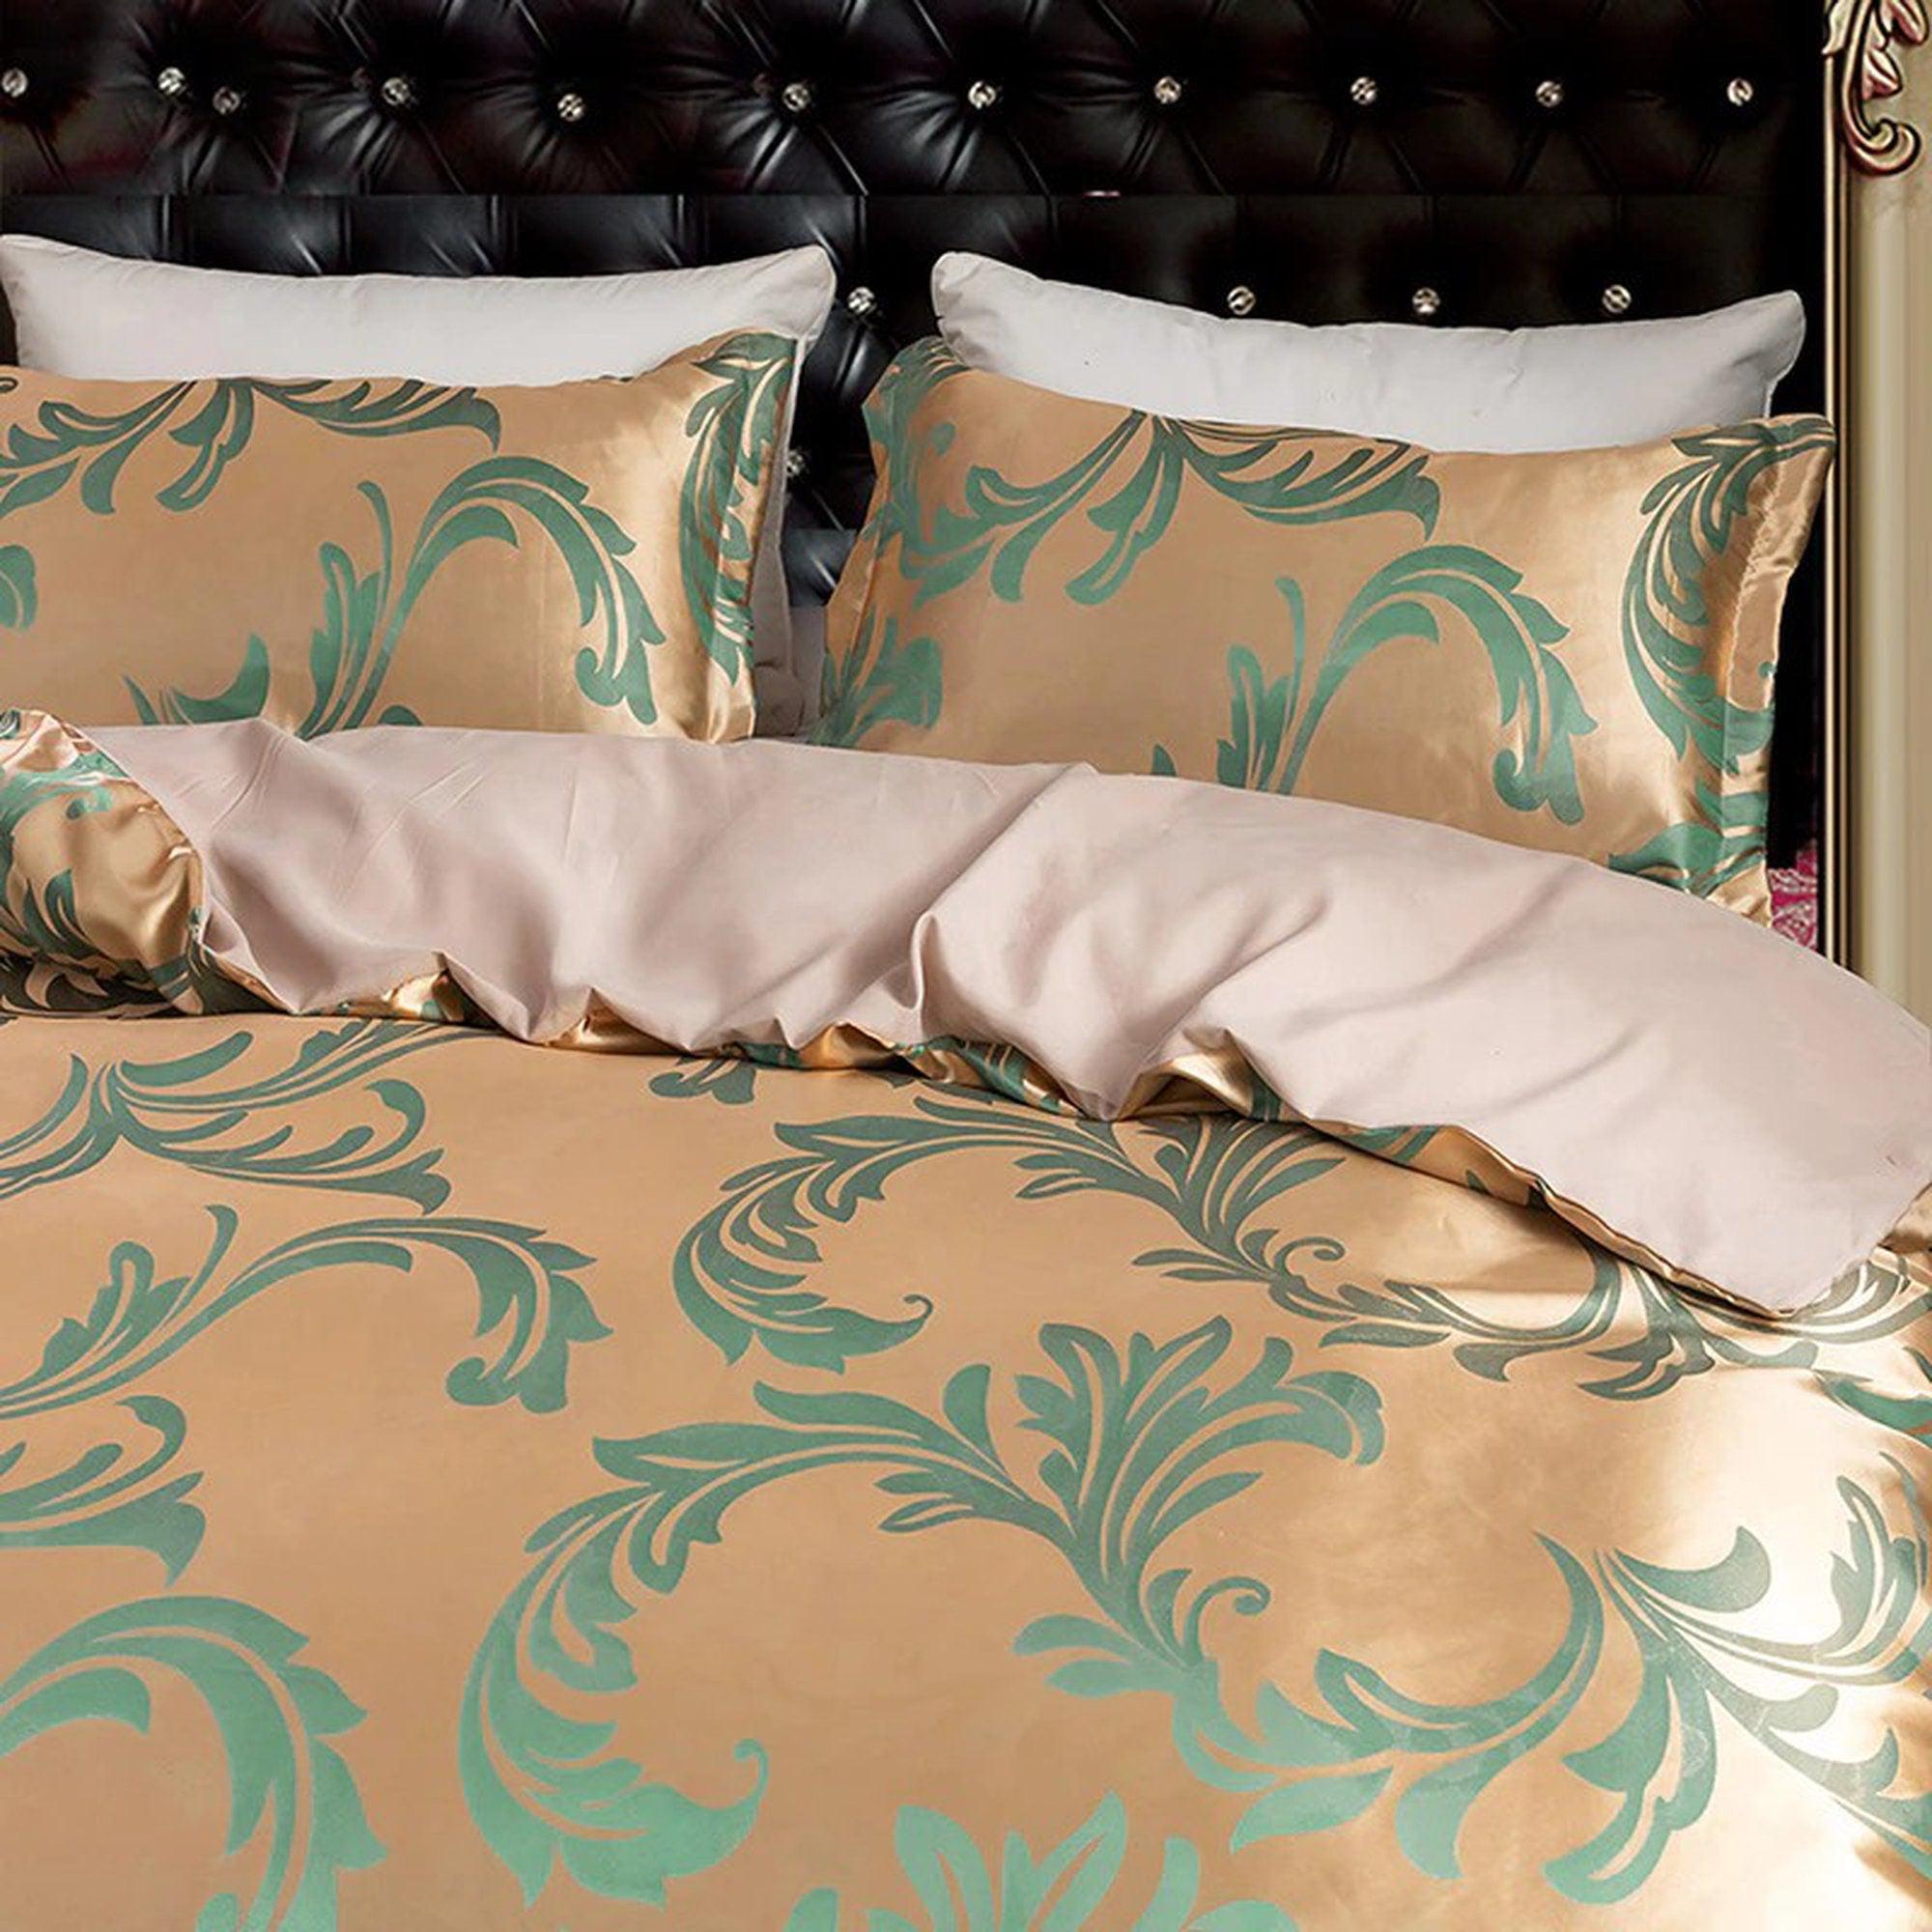 daintyduvet Luxury Copper Green Bedding made with Silky Jacquard Fabric, Damask Duvet Cover Set, Designer Bedding, Aesthetic Duvet King Queen Full Twin